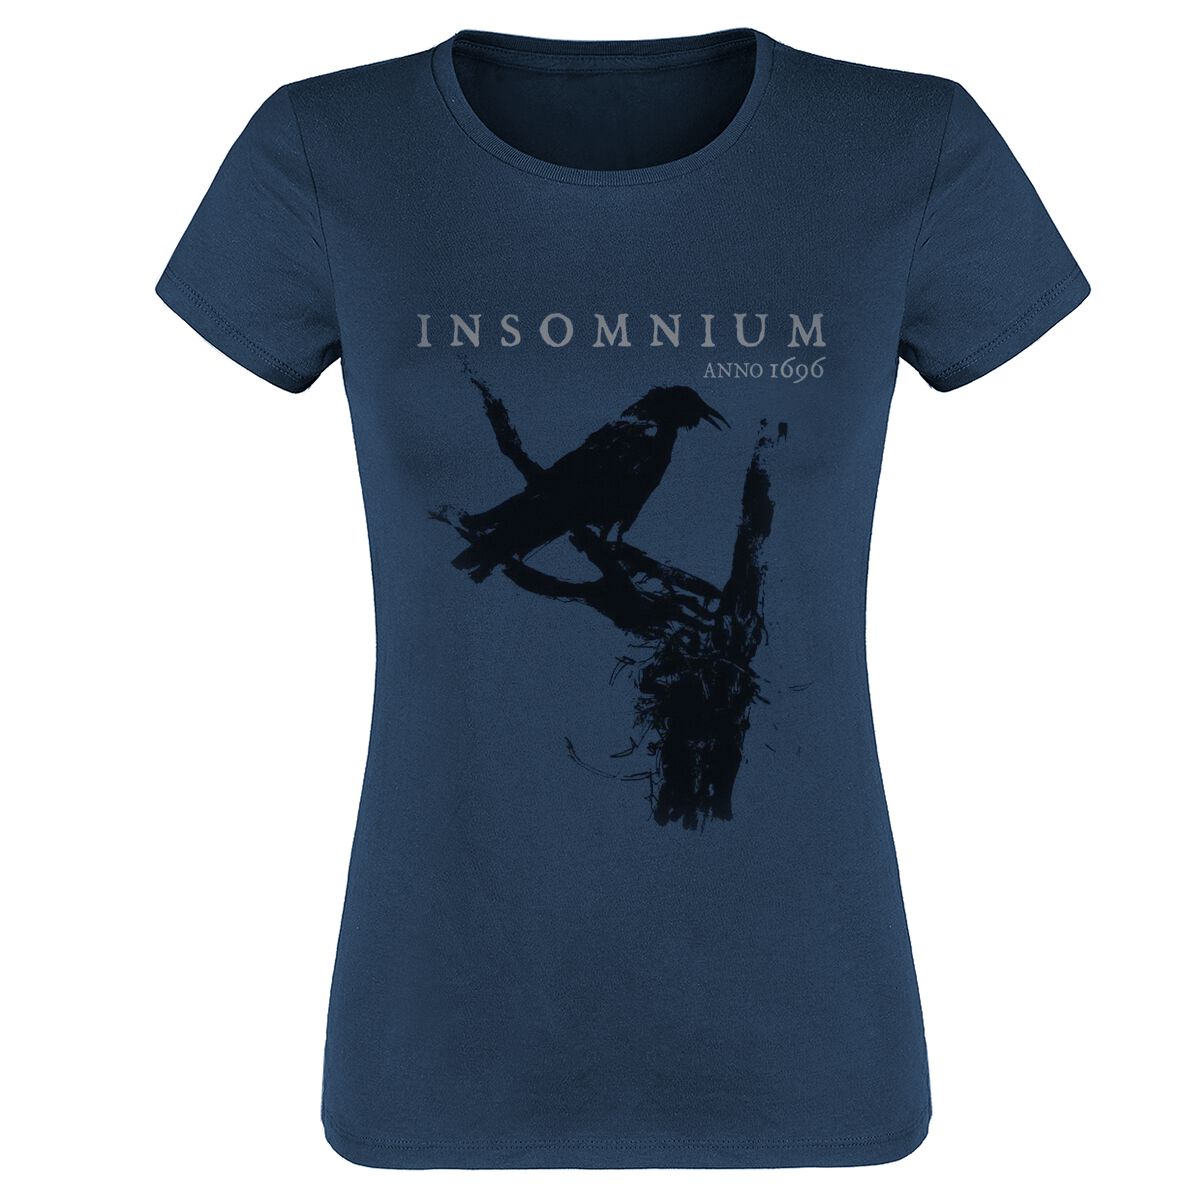 Insomnium Raven T-Shirt navy in L